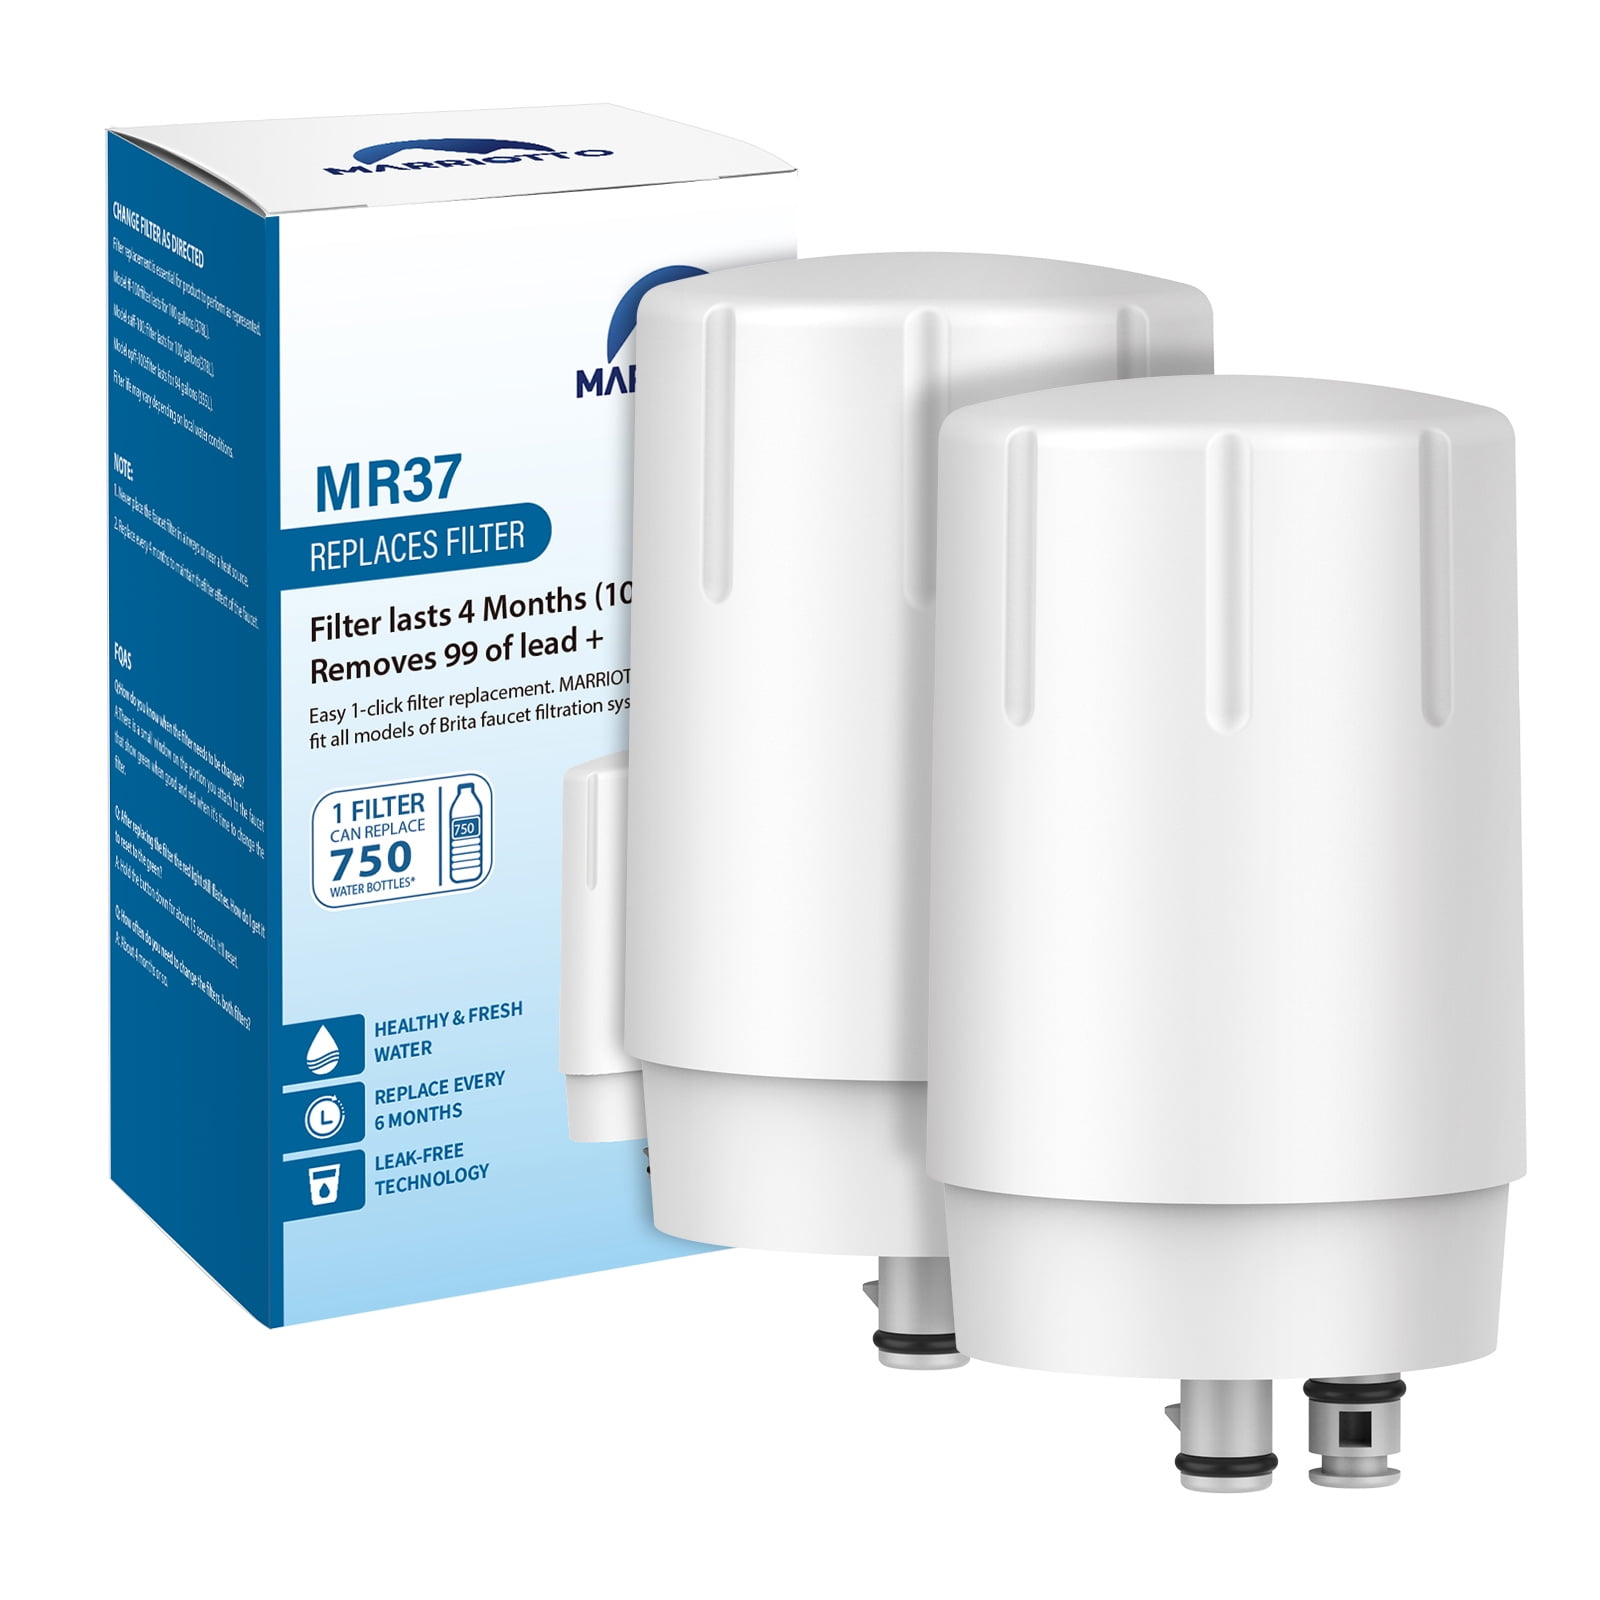 2-Pack Brita FR-200 White Faucet Filters 42402